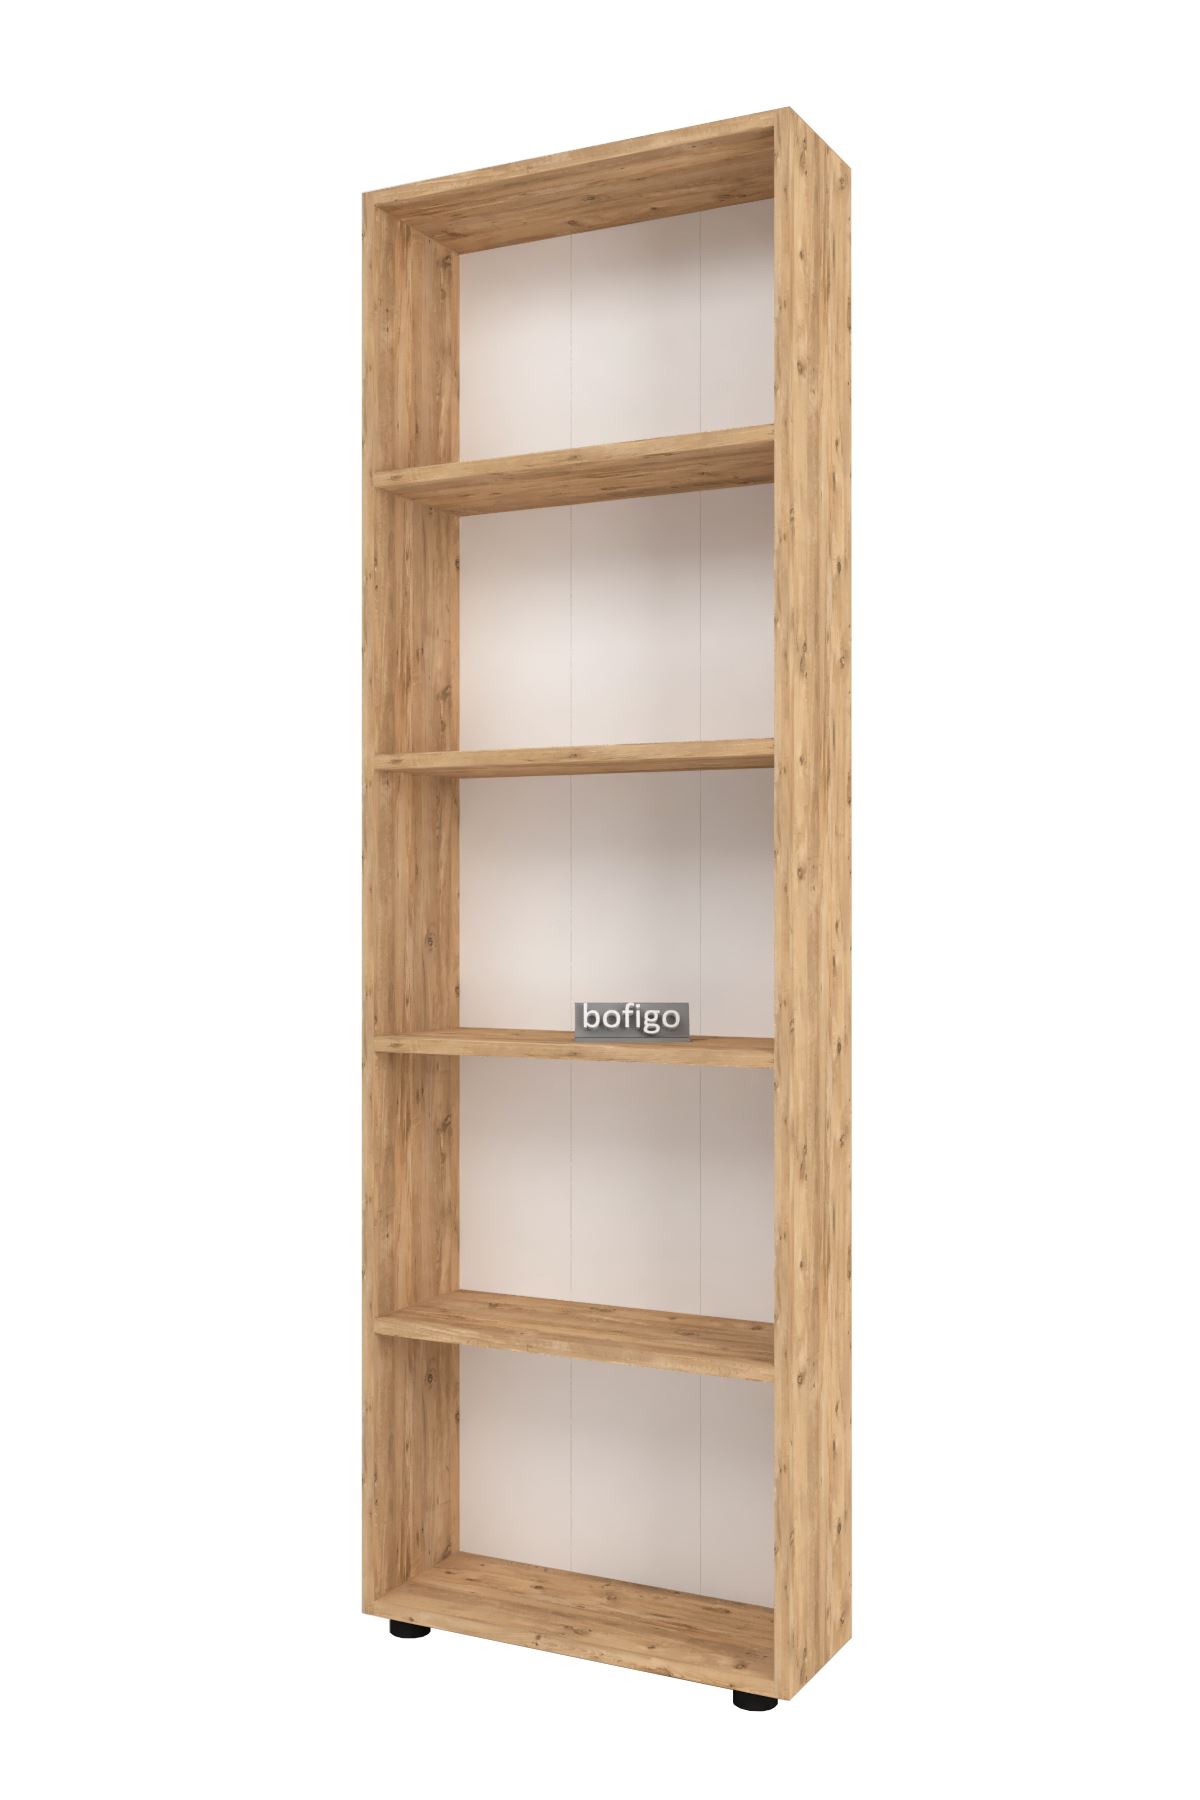 Bofigo Decorative 5 Shelf Bookcase Pine